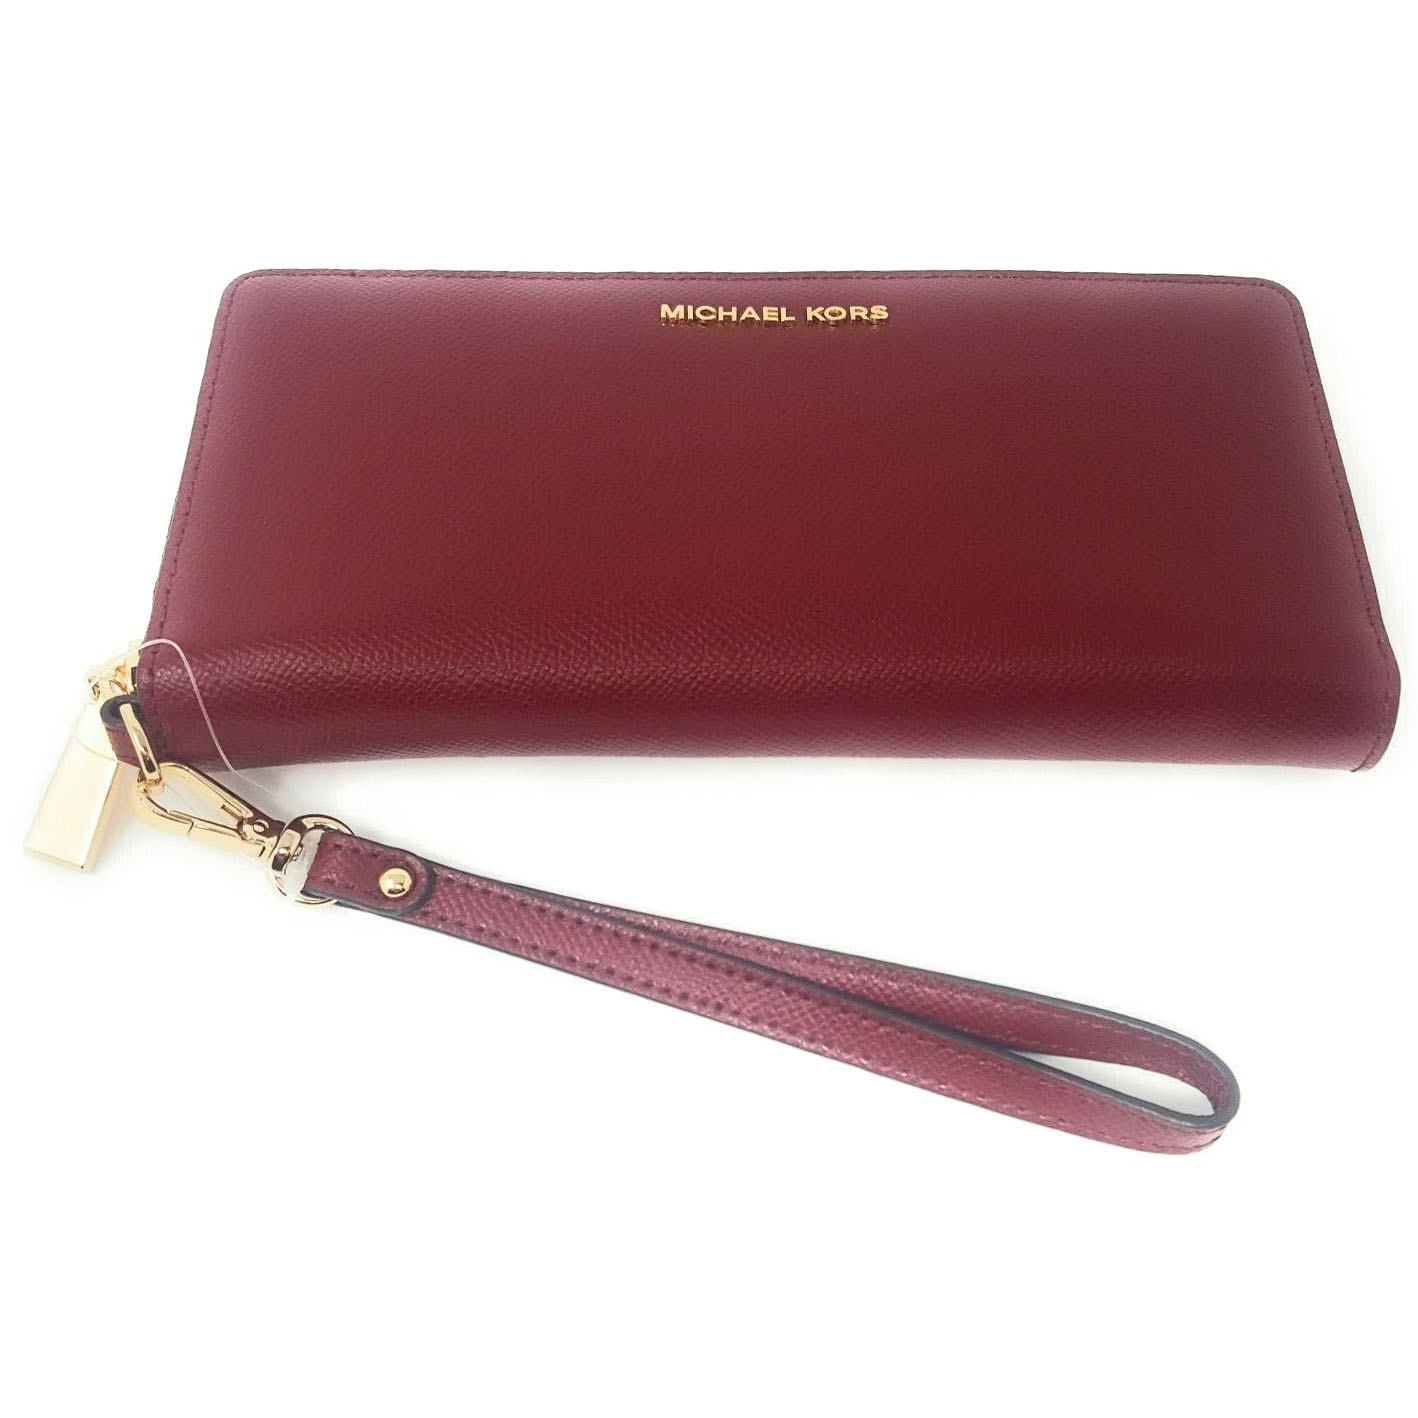 Michael Kors Wallet Wristlet With Gift Bag Jet Set Travel Continental Leather Wallet Wristlet Maroon Dark Red # 32S5GTVE9L